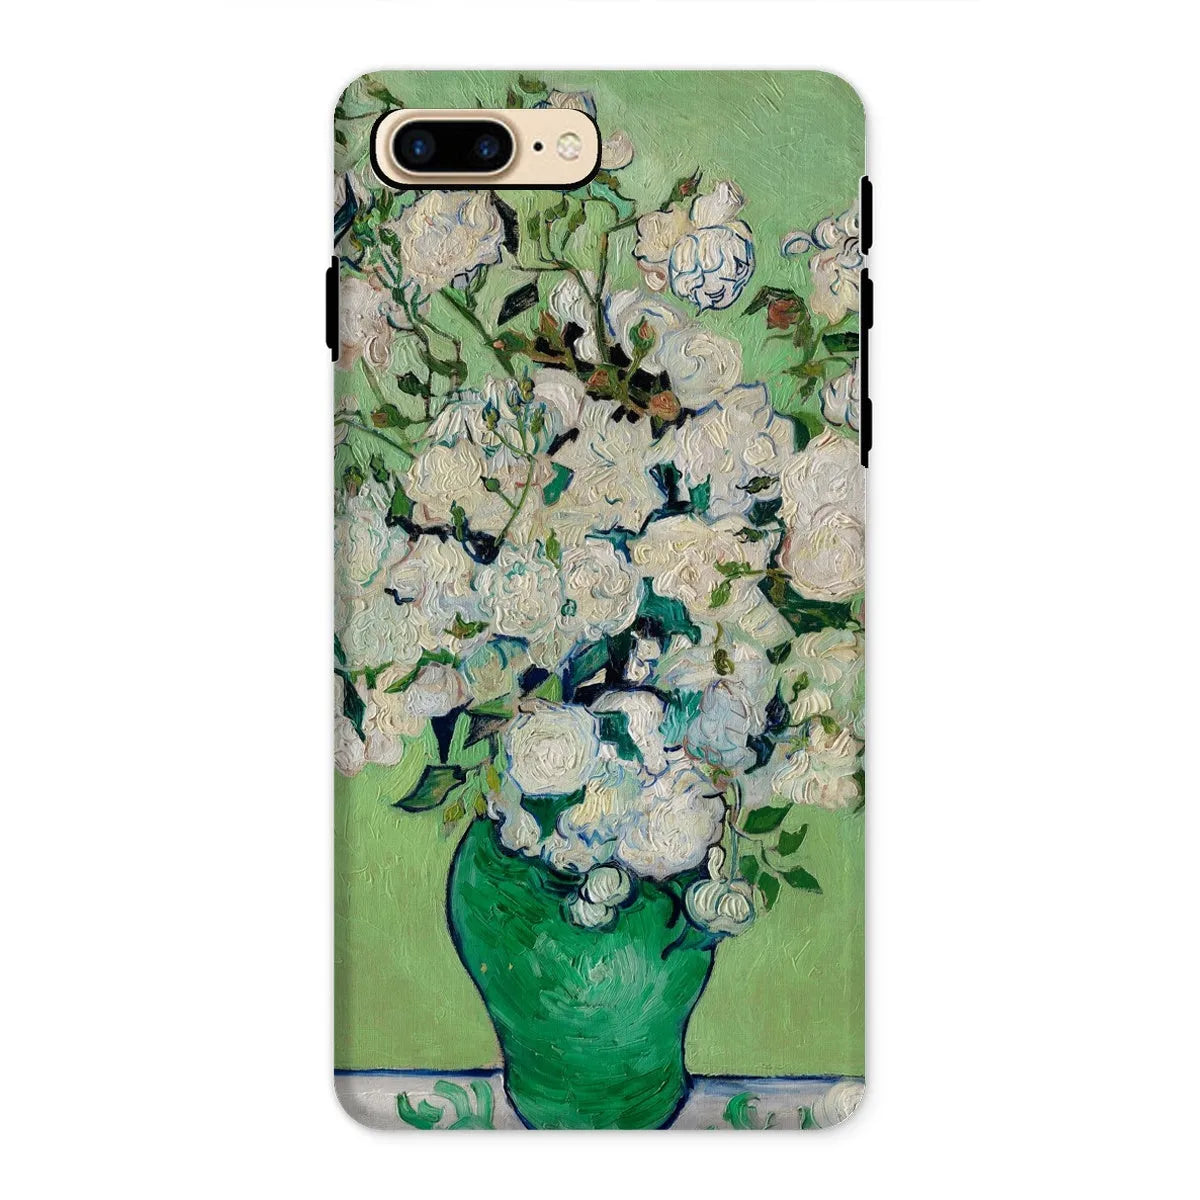 Roses - Post-impressionist Phone Case - Vincent Van Gogh - Iphone 8 Plus / Matte - Mobile Phone Cases - Aesthetic Art